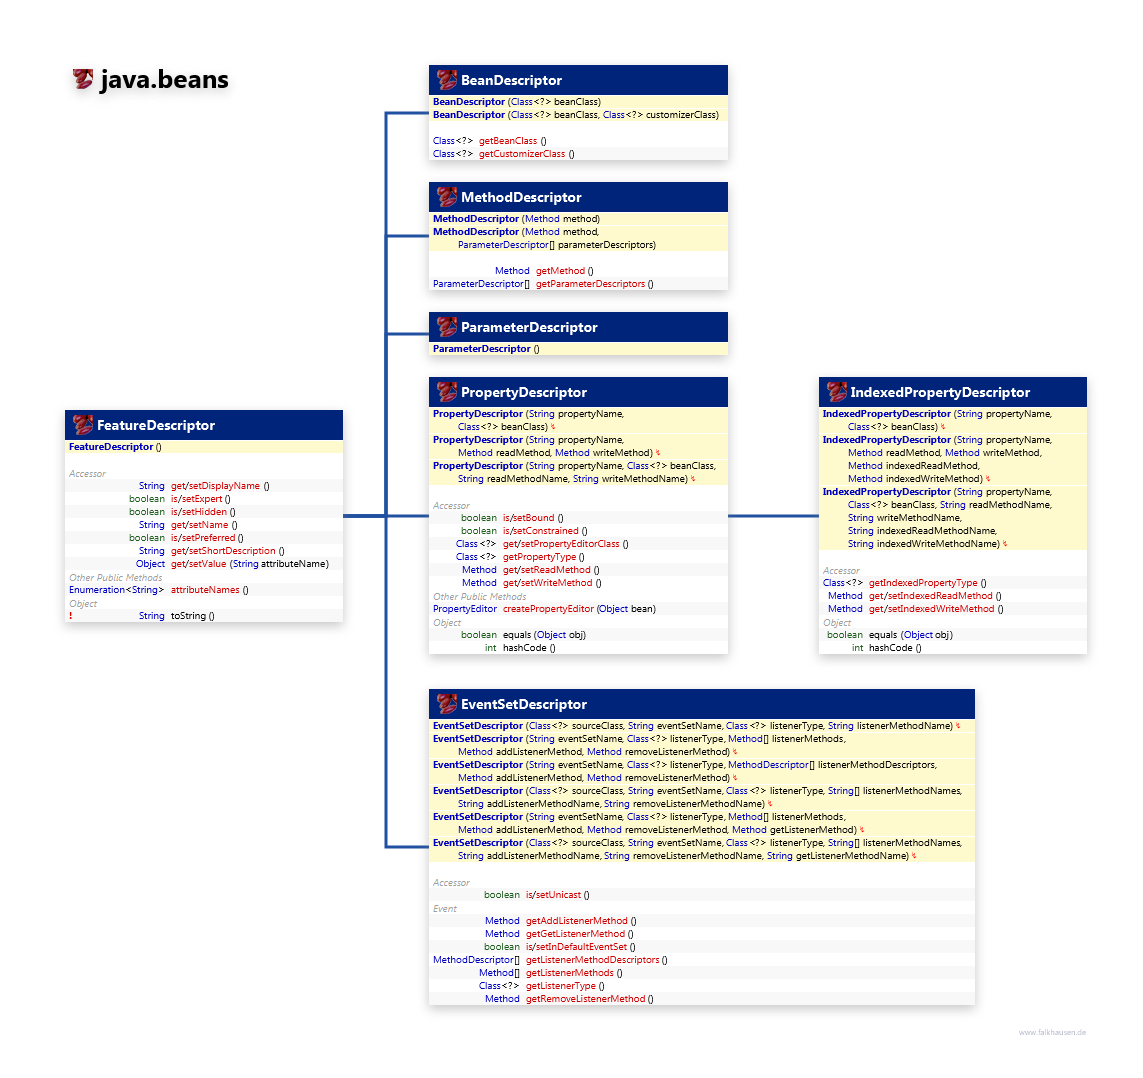 java.beans FeatureDescriptor class diagram and api documentation for Java 7